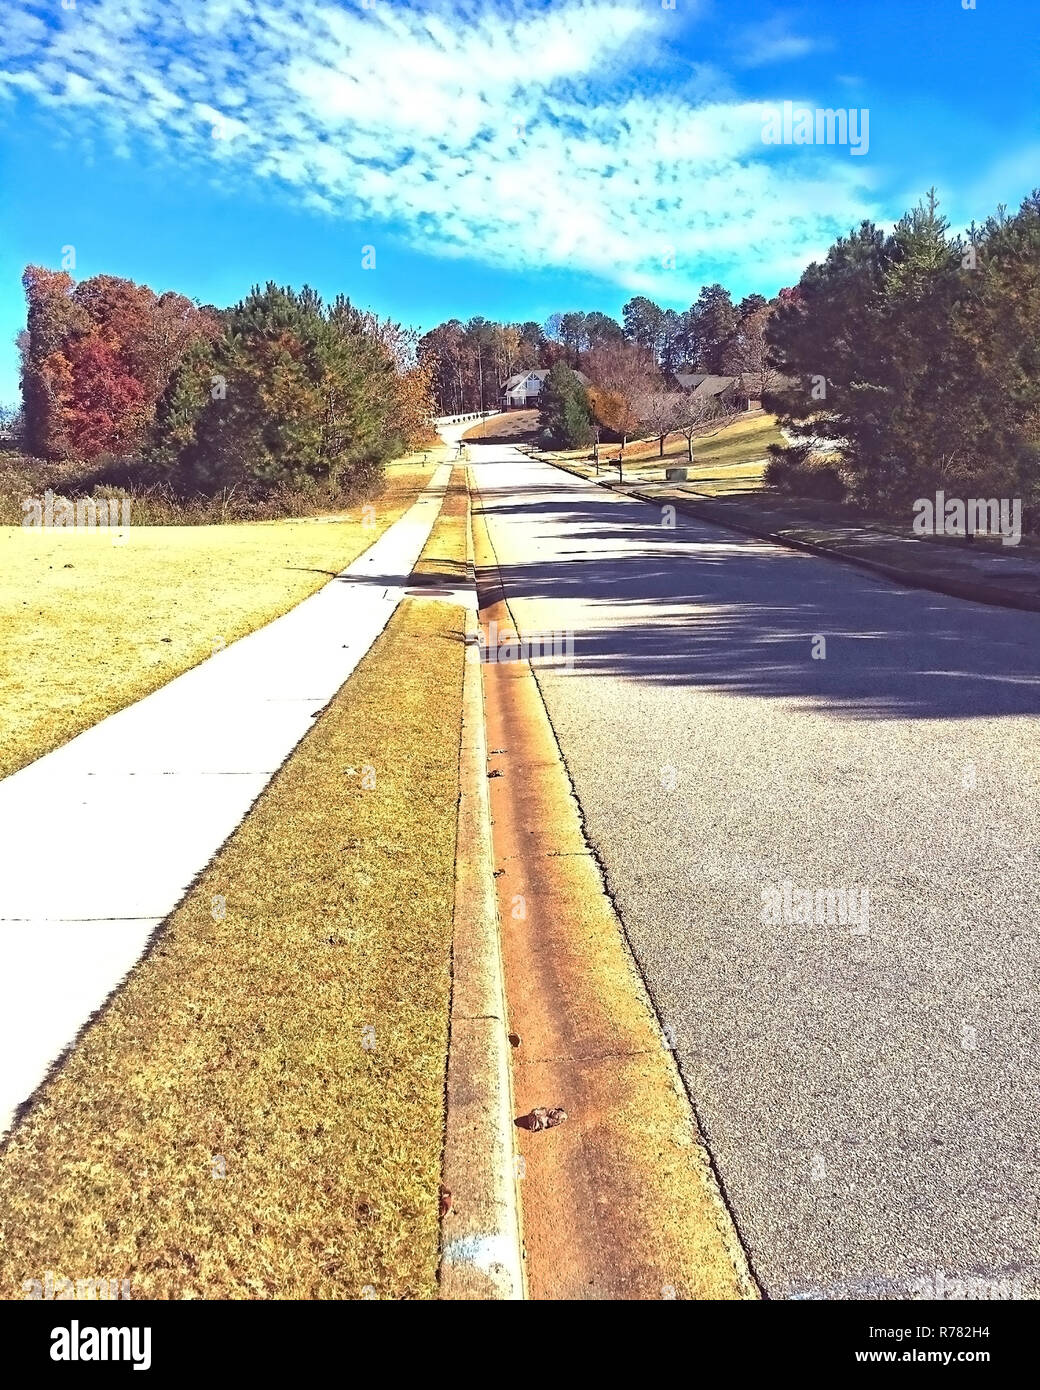 Sidewalk and Street in a Neighborhood Stock Photo